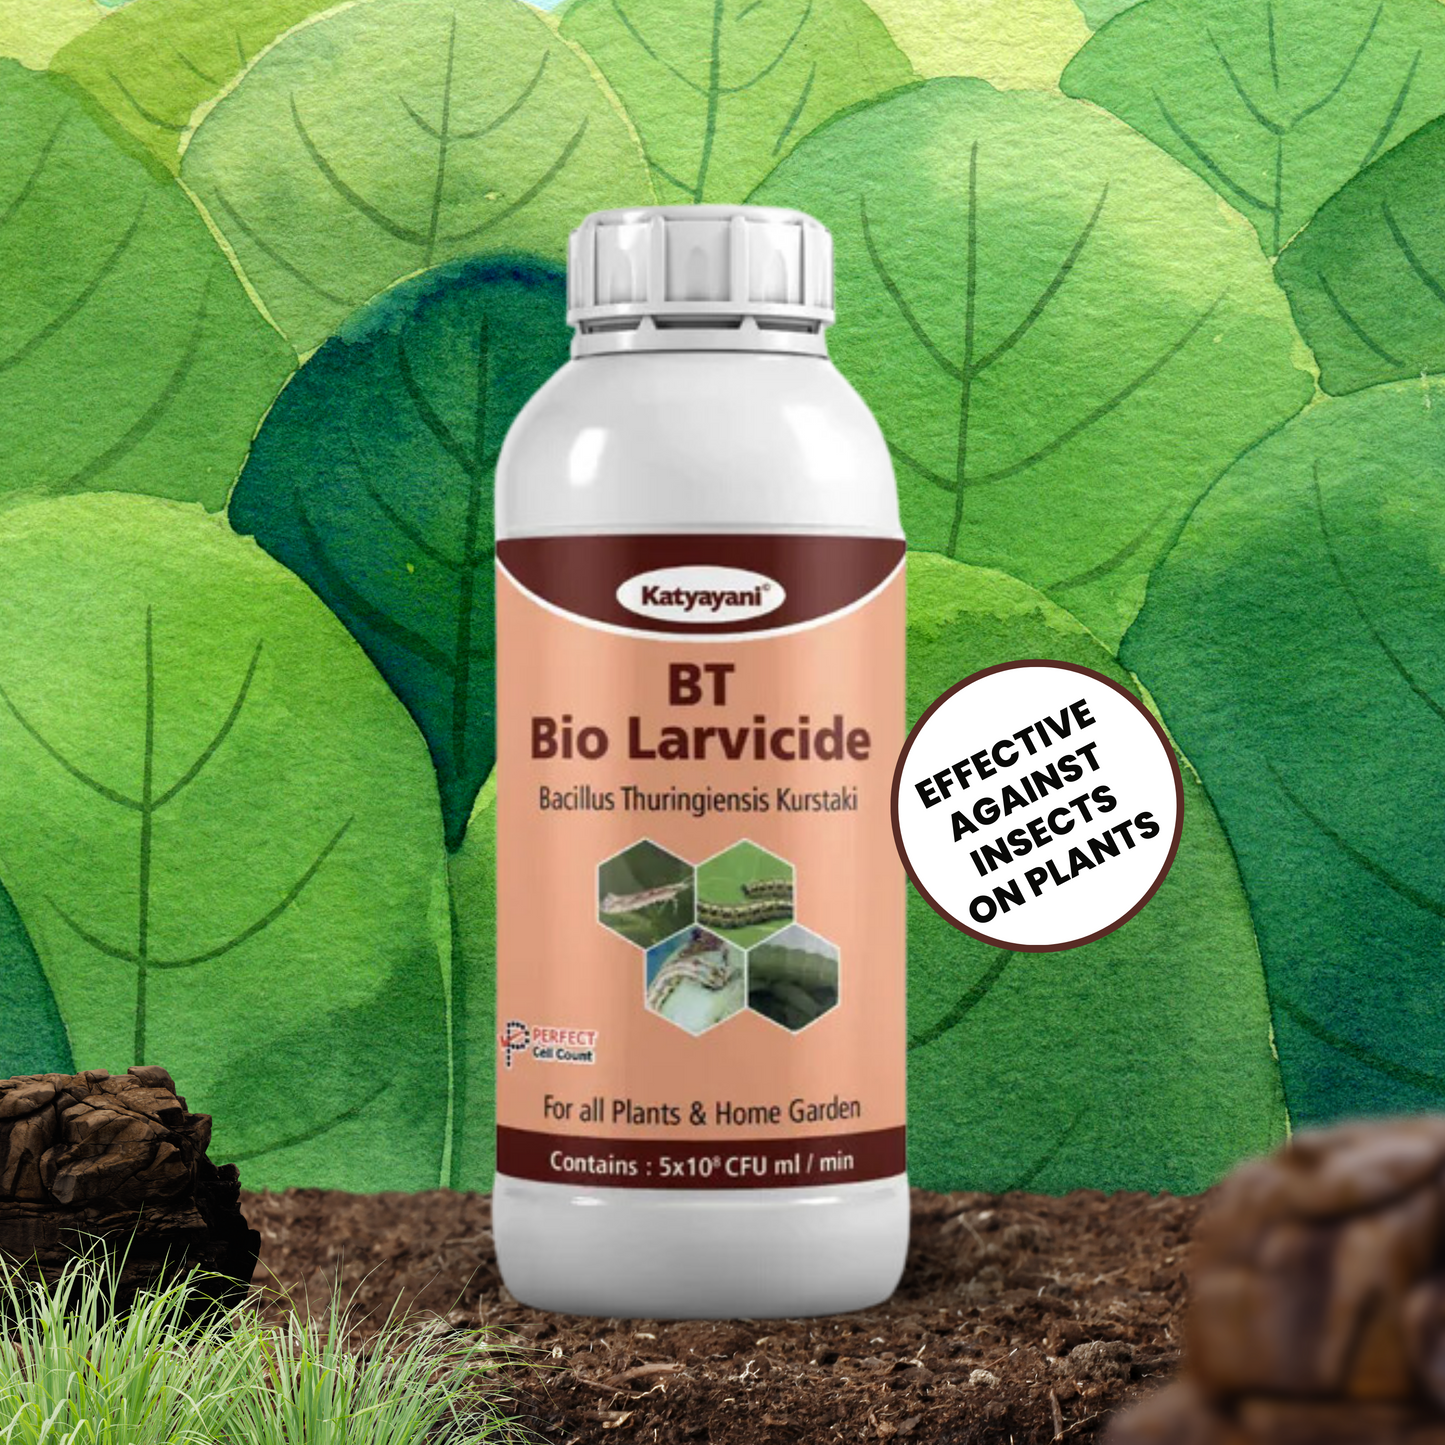 Katyayani BT Bio Larvicide - Pesticide